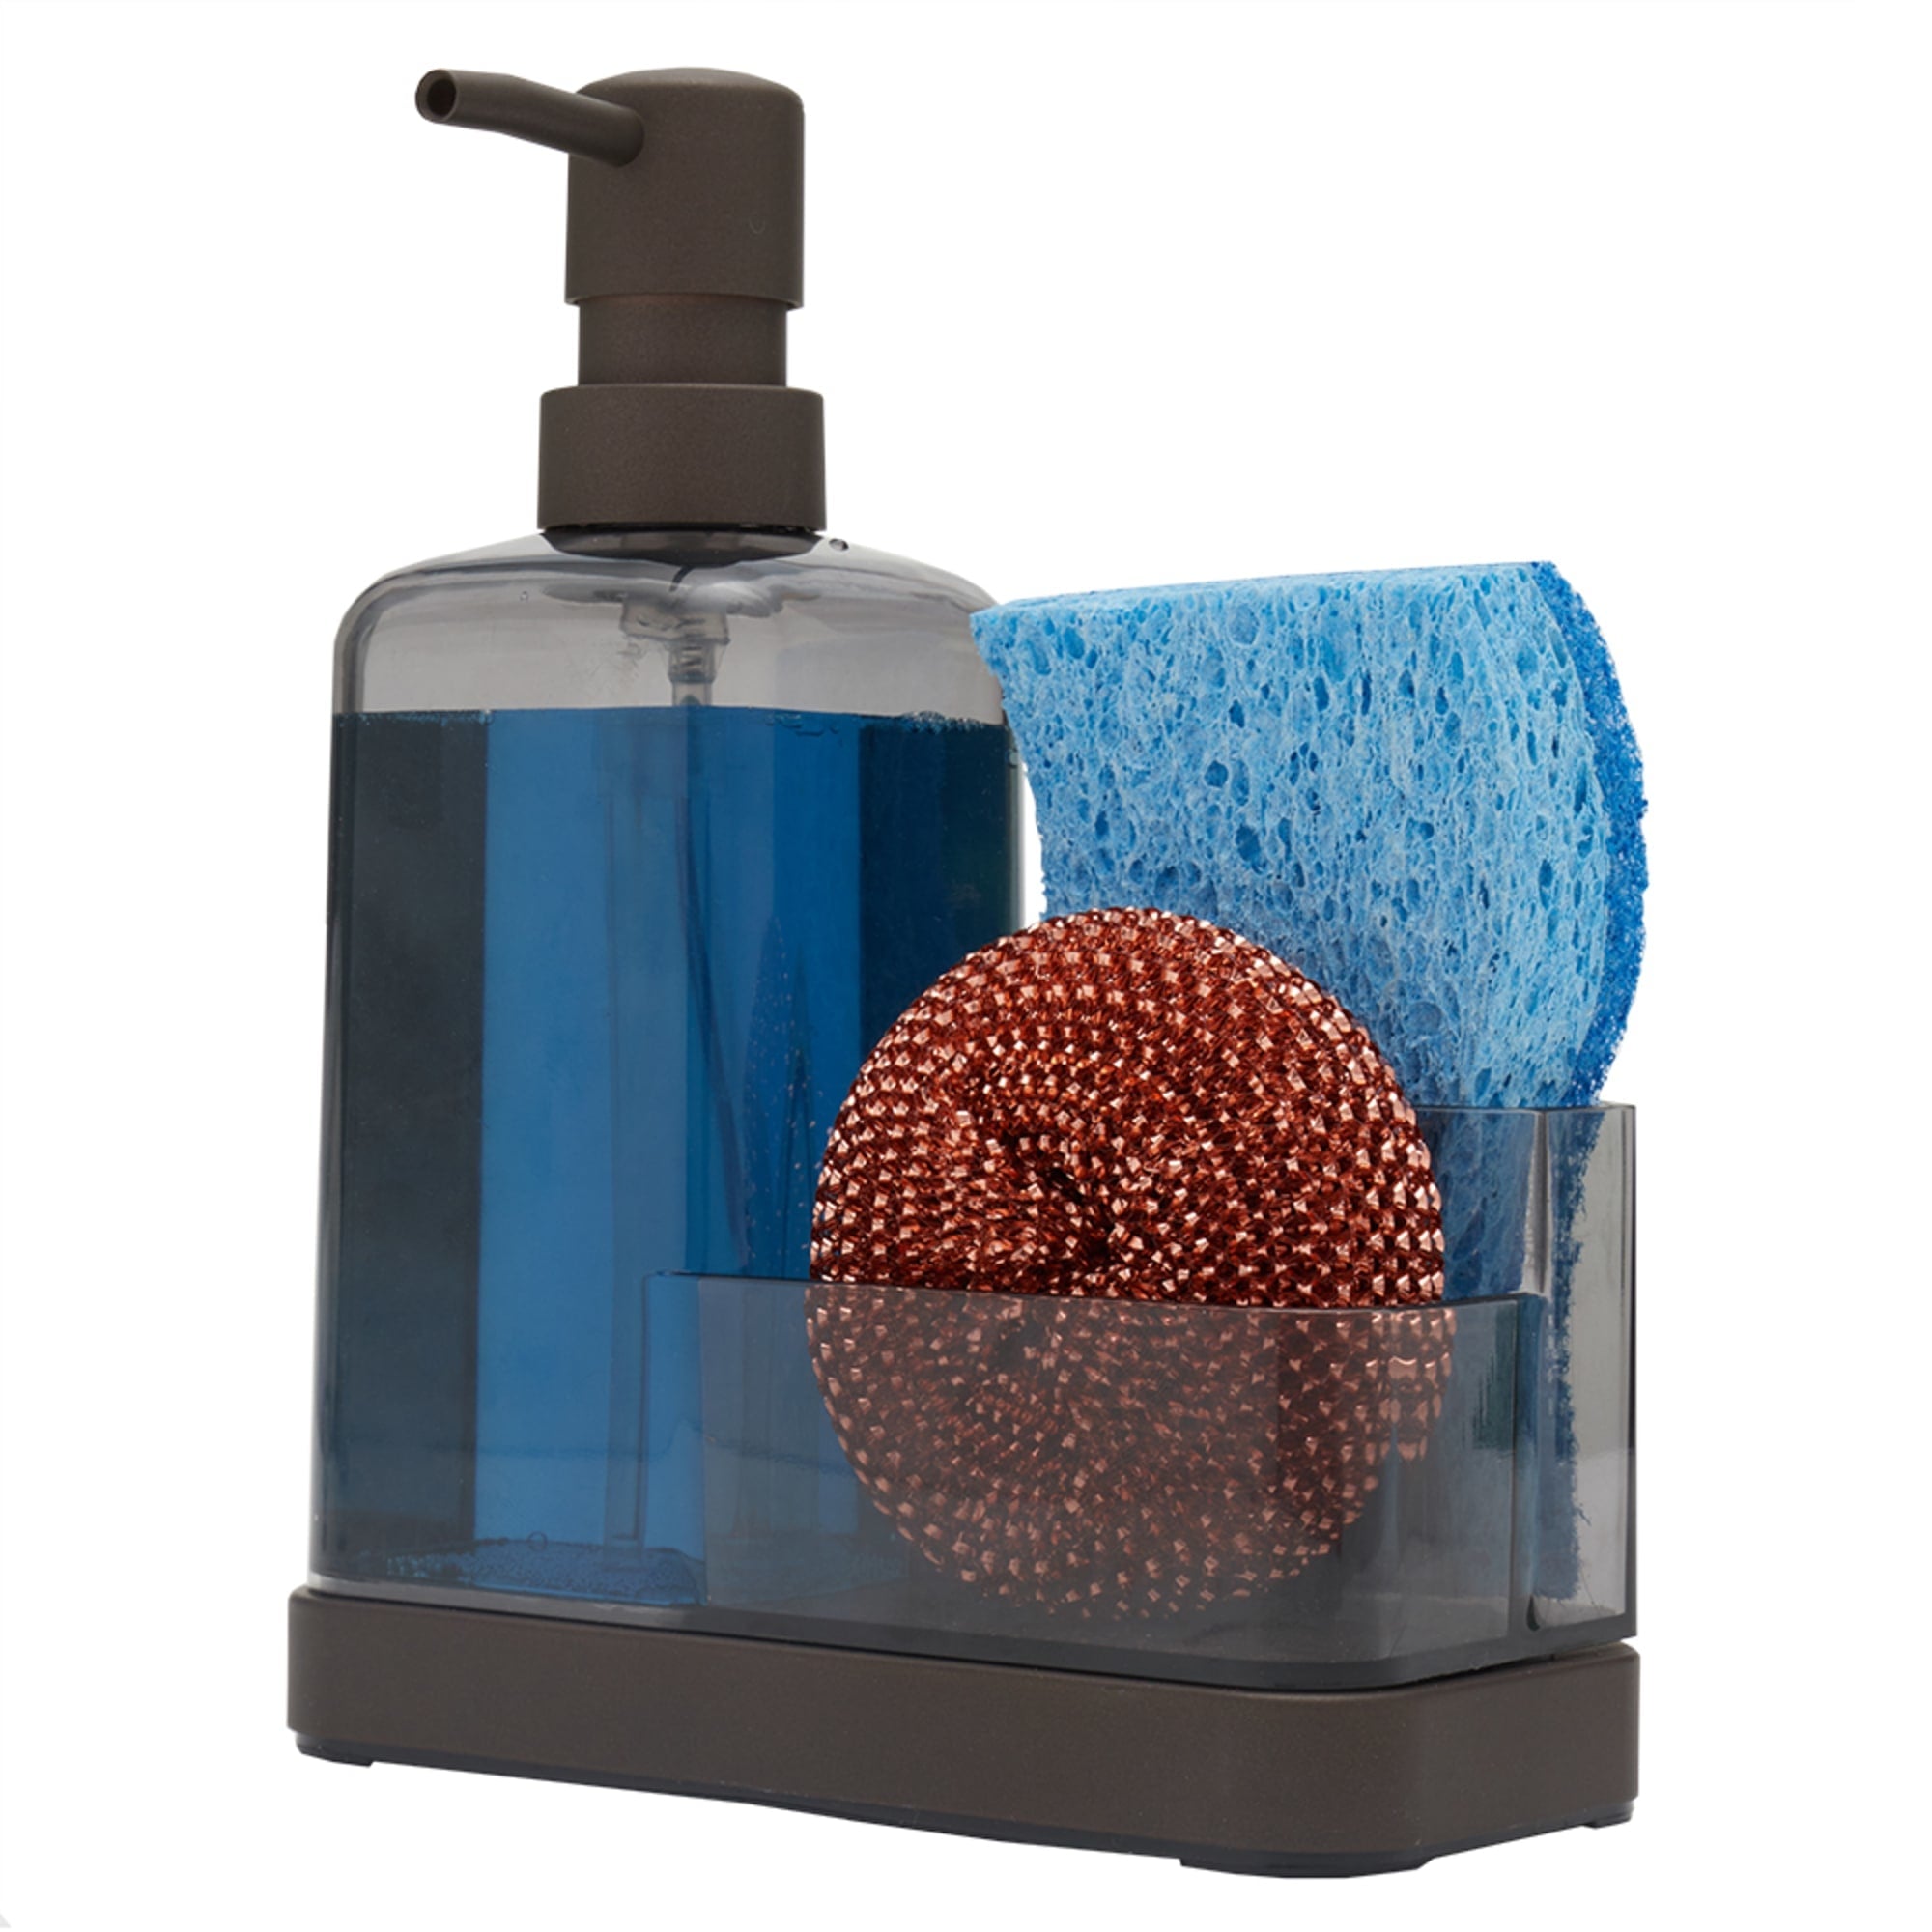 Home Basics 13.5 oz. Plastic Soap Dispenser with Sponge Compartment, Bronze $6.00 EACH, CASE PACK OF 12